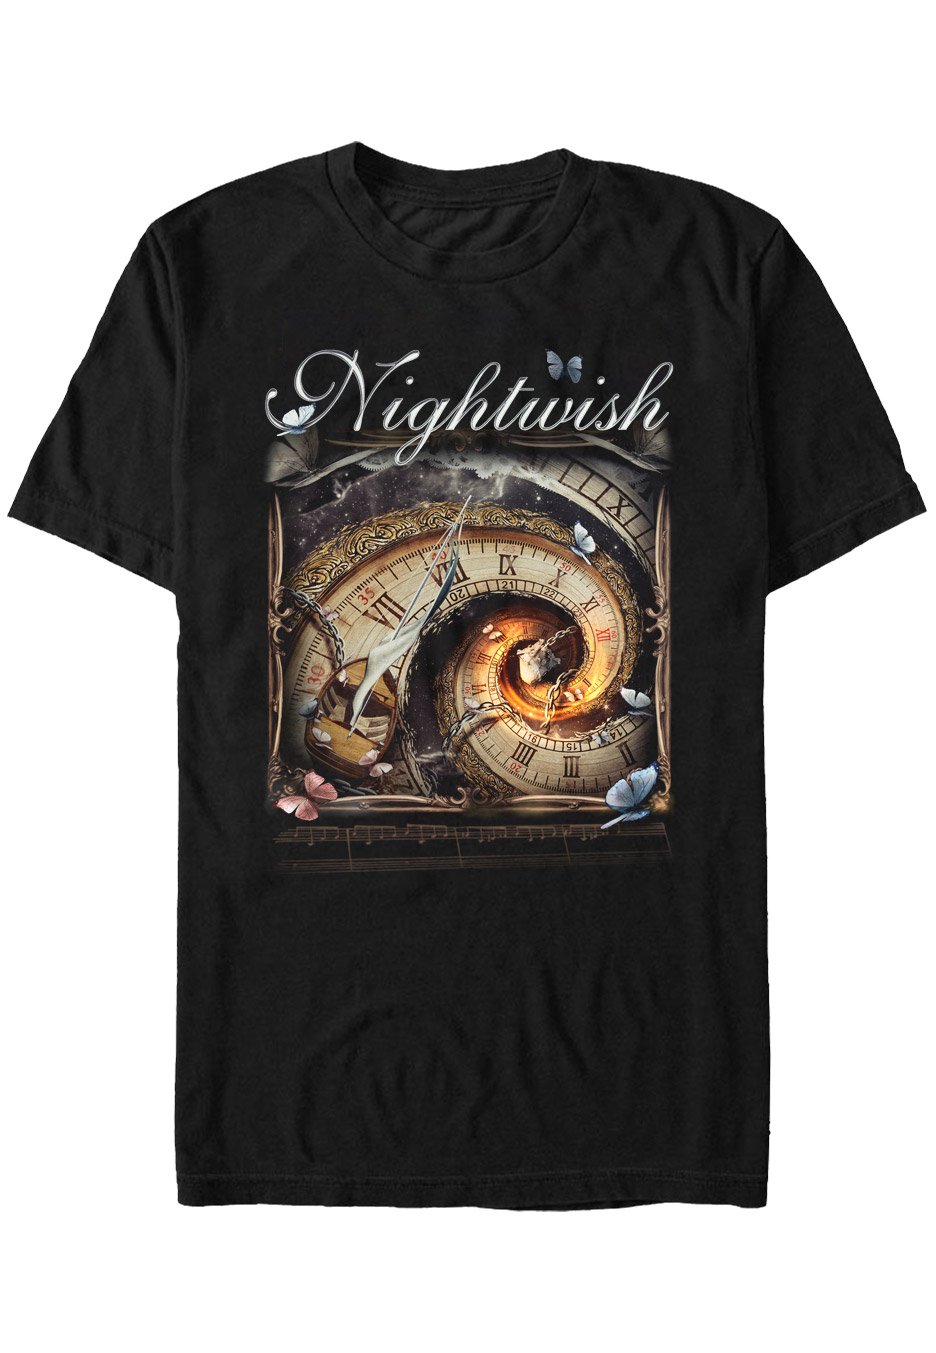 Nightwish - Yesterwynde - T-Shirt